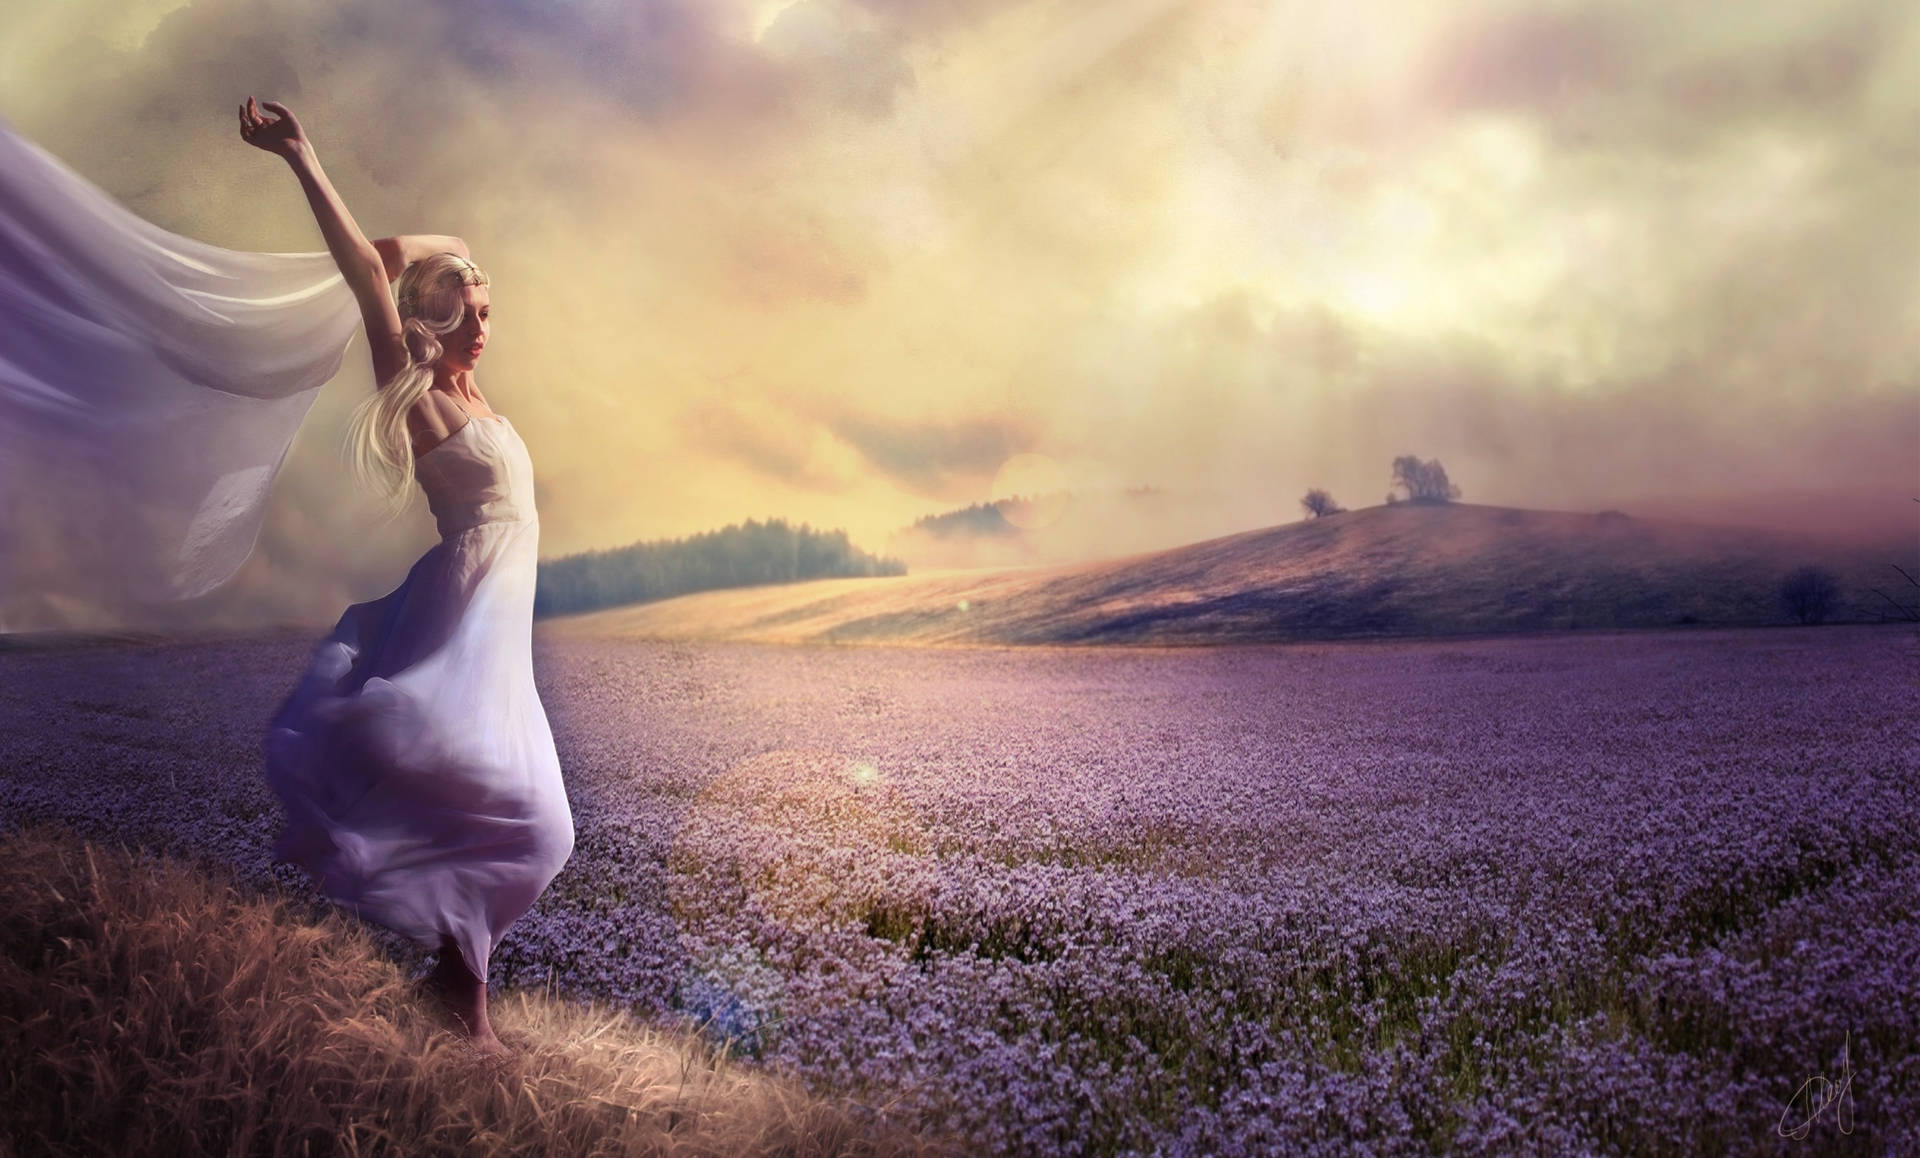 Woman and lavender field fantasy art wallpaper.